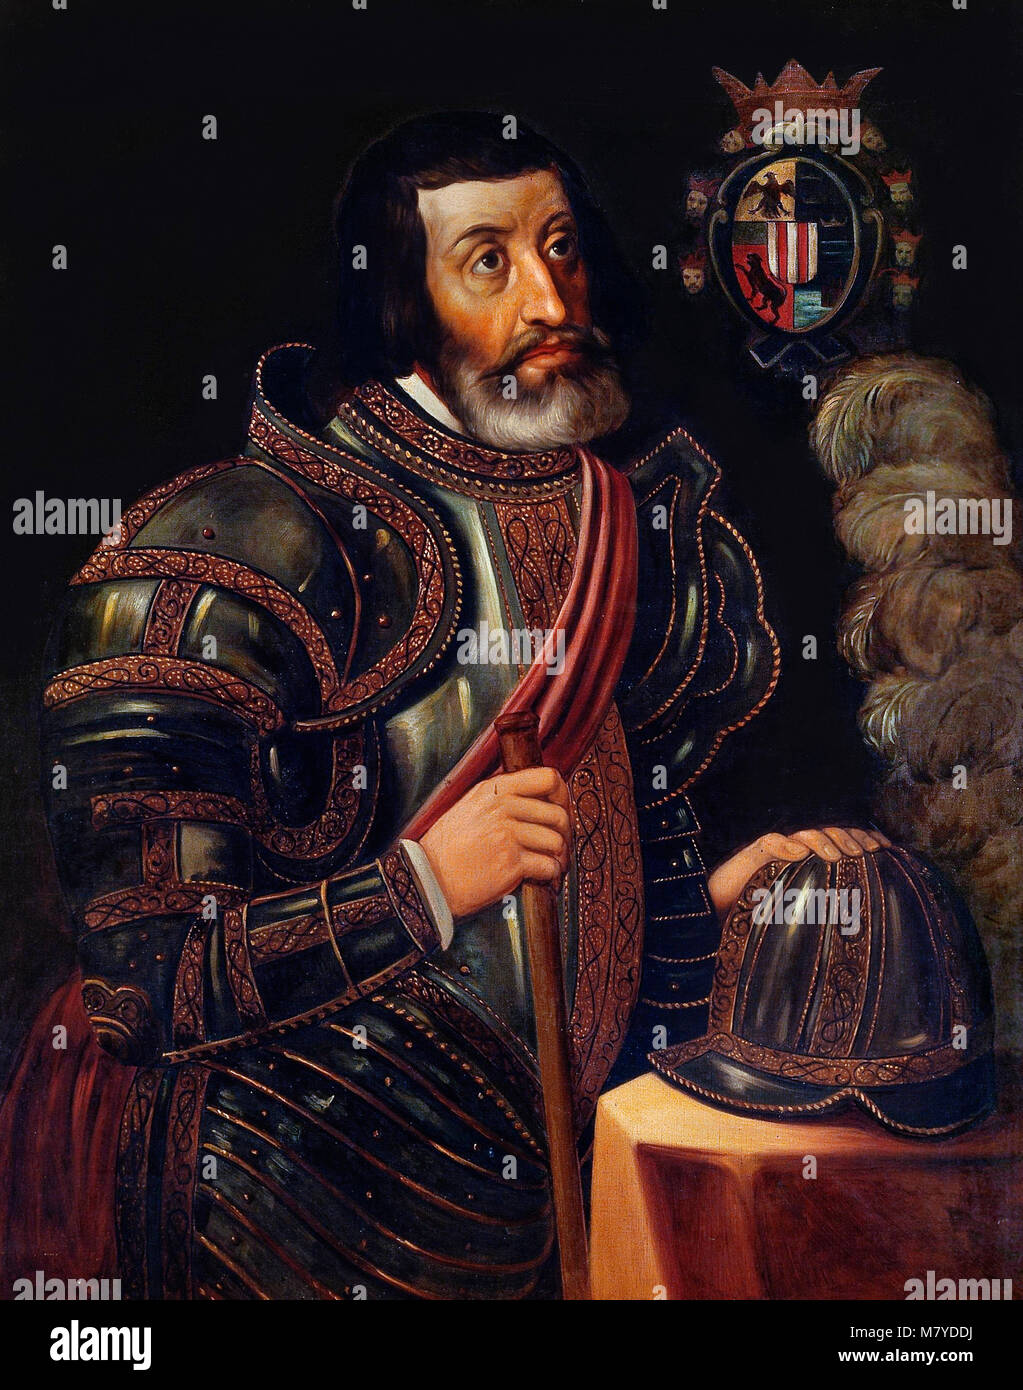 De Hernán Cortés Monroy Pizarro Altamirano y, Marquis de la vallée d'Oaxaca (1485-1547). Portrait de le conquistador espagnol Hernan Cortes, par José Salomé Pina, huile sur toile, c.1879. Banque D'Images